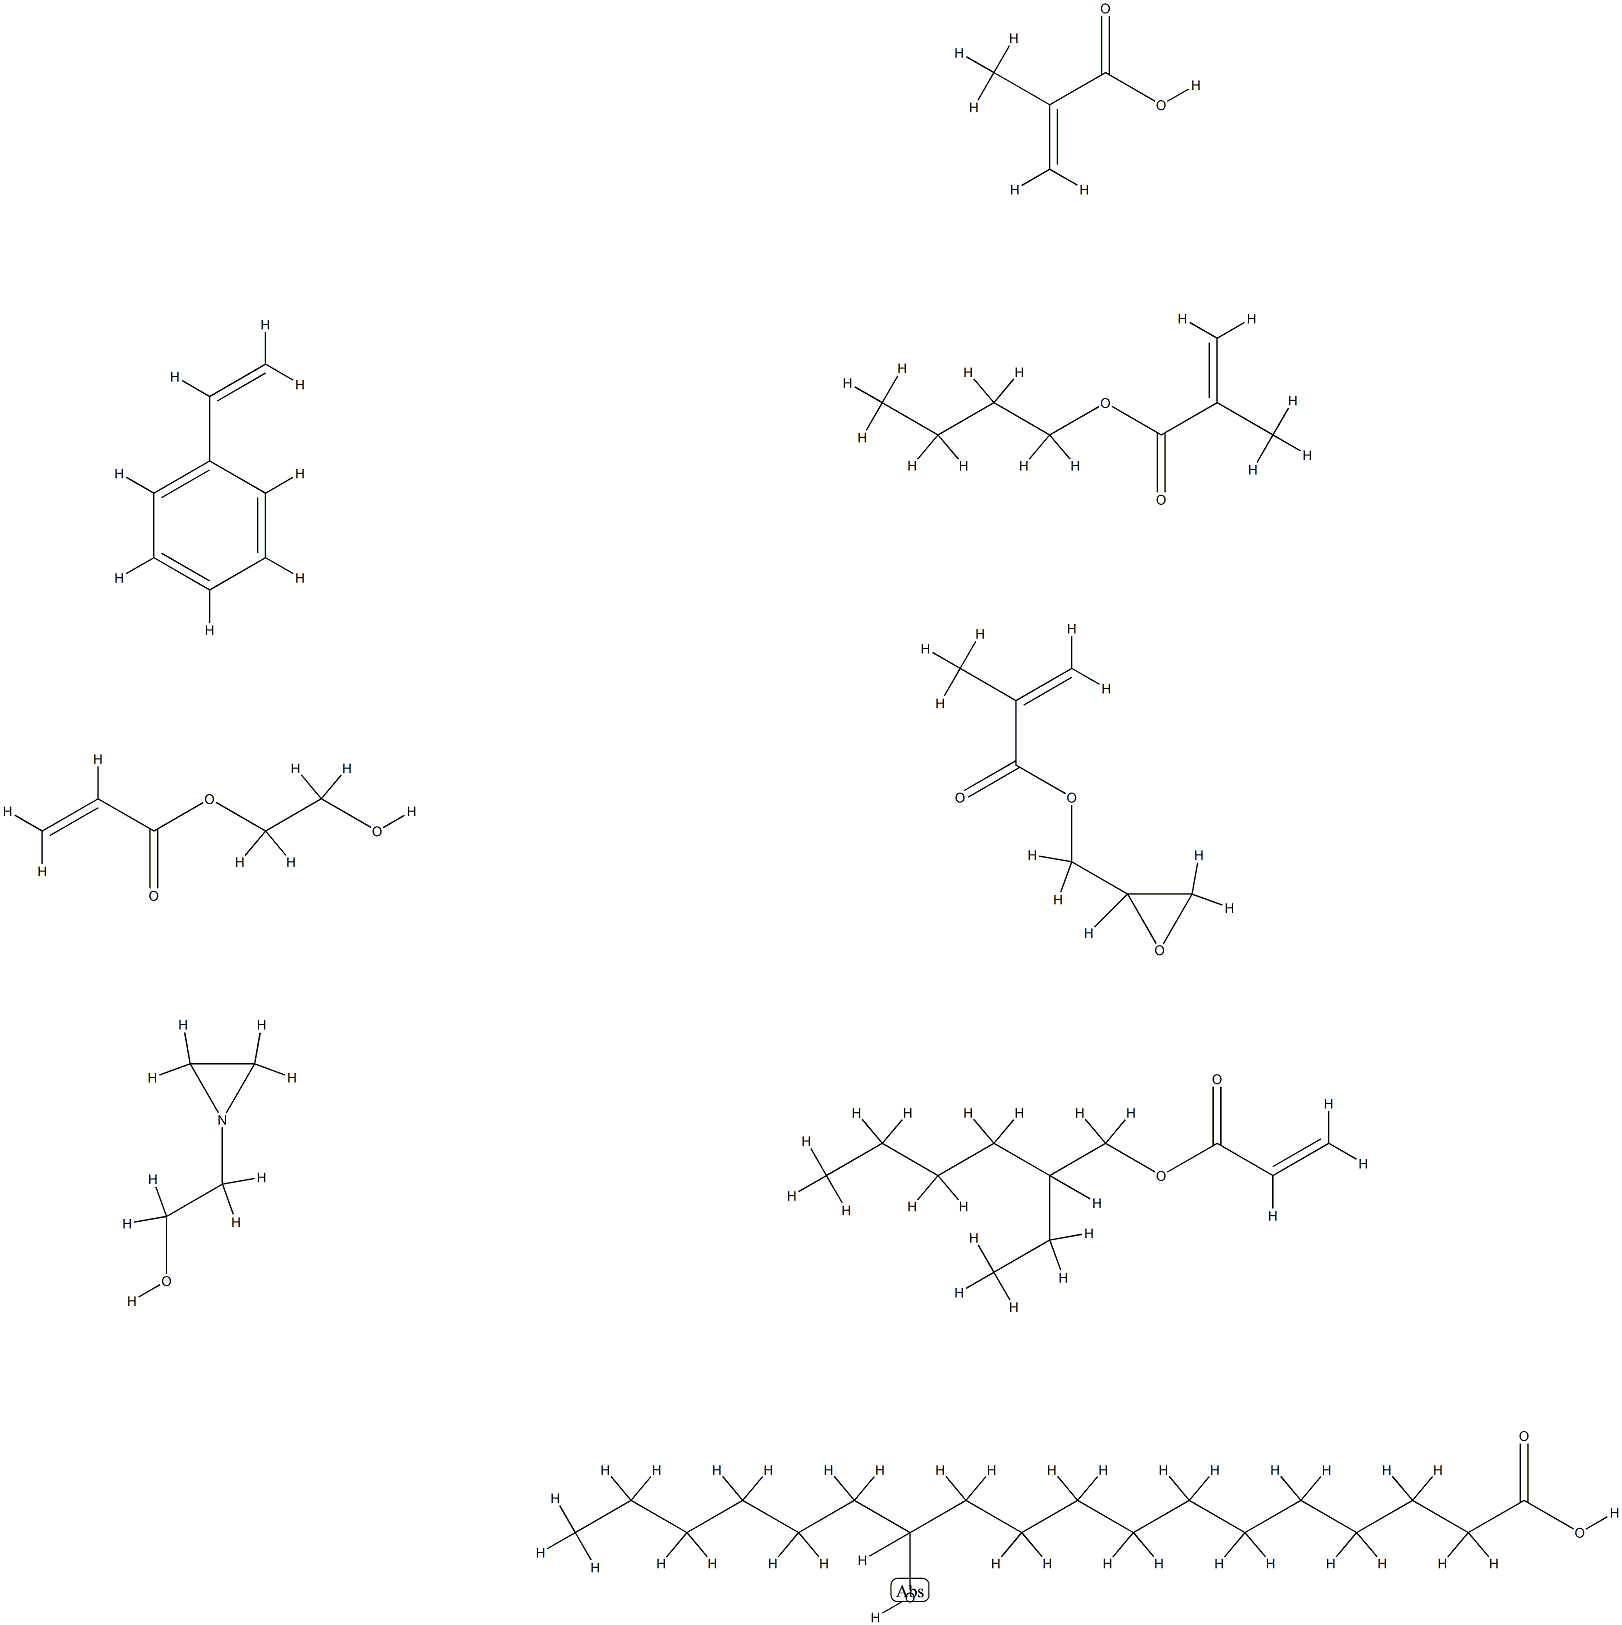 Octadecanoic acid, 12-hydroxy-, polymer with butyl 2-methyl-2-propenoate, ethenylbenzene, 2-ethylhexyl 2-propenoate, 2-hydroxyethyl 2-propenoate, 2-methyl-2-propenoic acid and oxiranylmethyl 2-methyl-2-propenoate, 1-aziridineethanol-terminated|